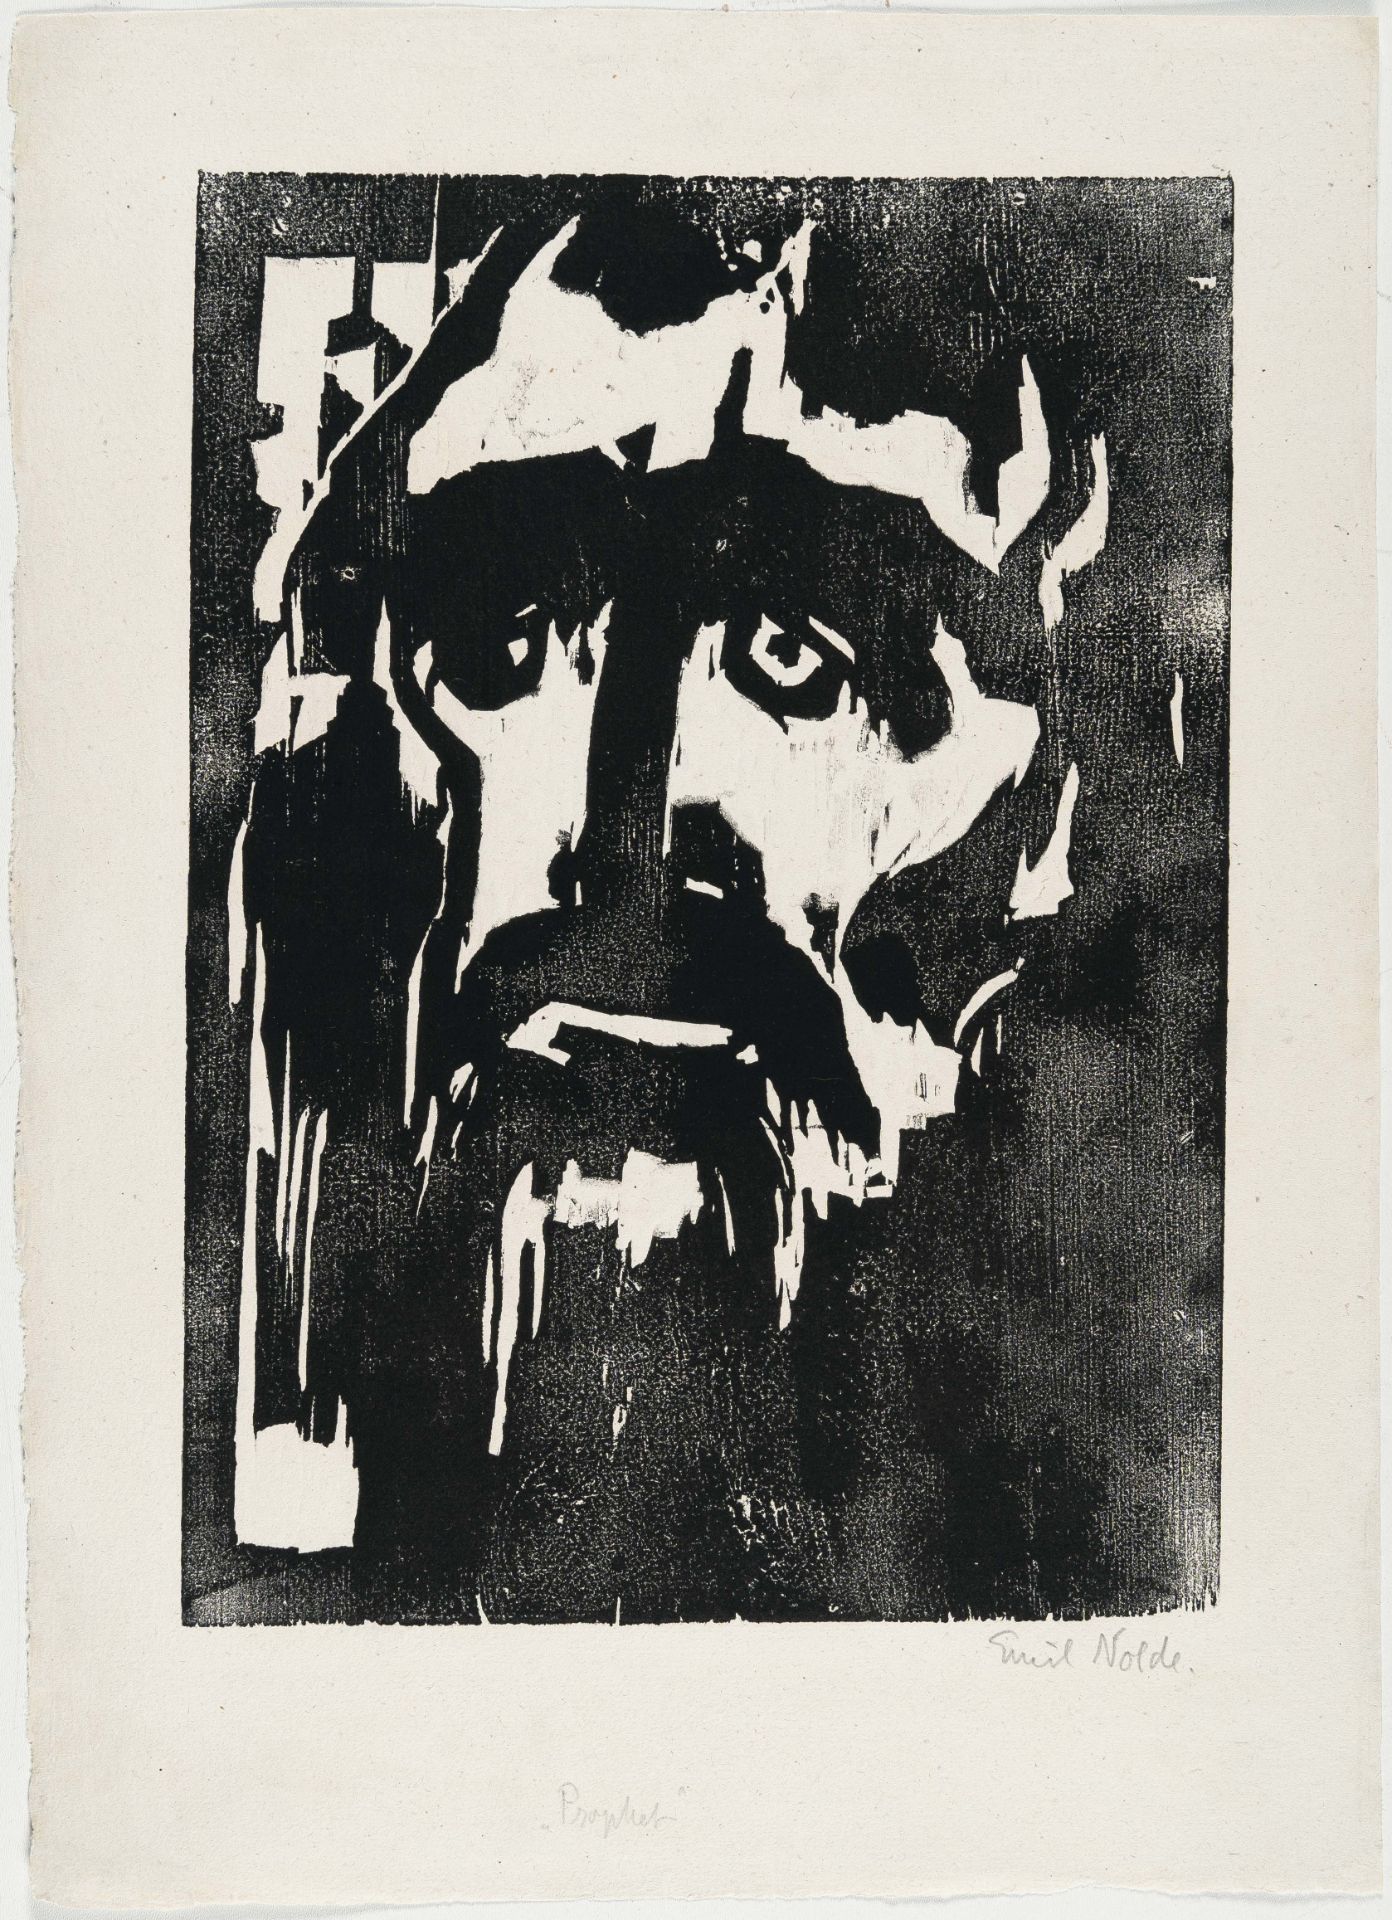 Emil Nolde (1867 Nolde - Seebüll 1956) – The prophet.Woodcut on heavy cream wove paper. (1912).